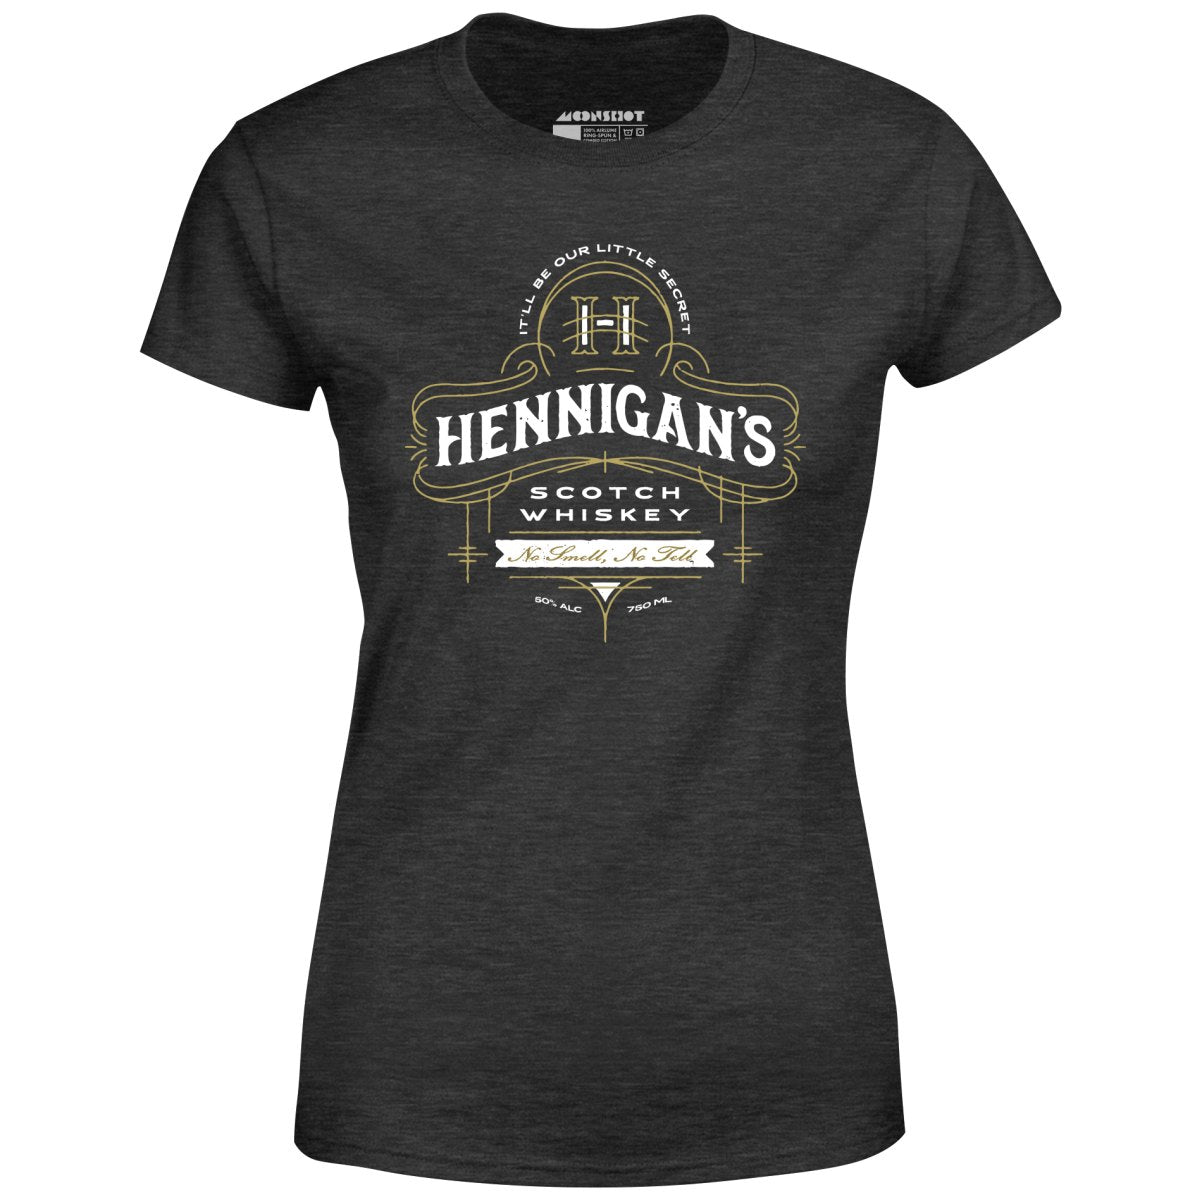 Hennigan's Scotch Whiskey - Women's T-Shirt